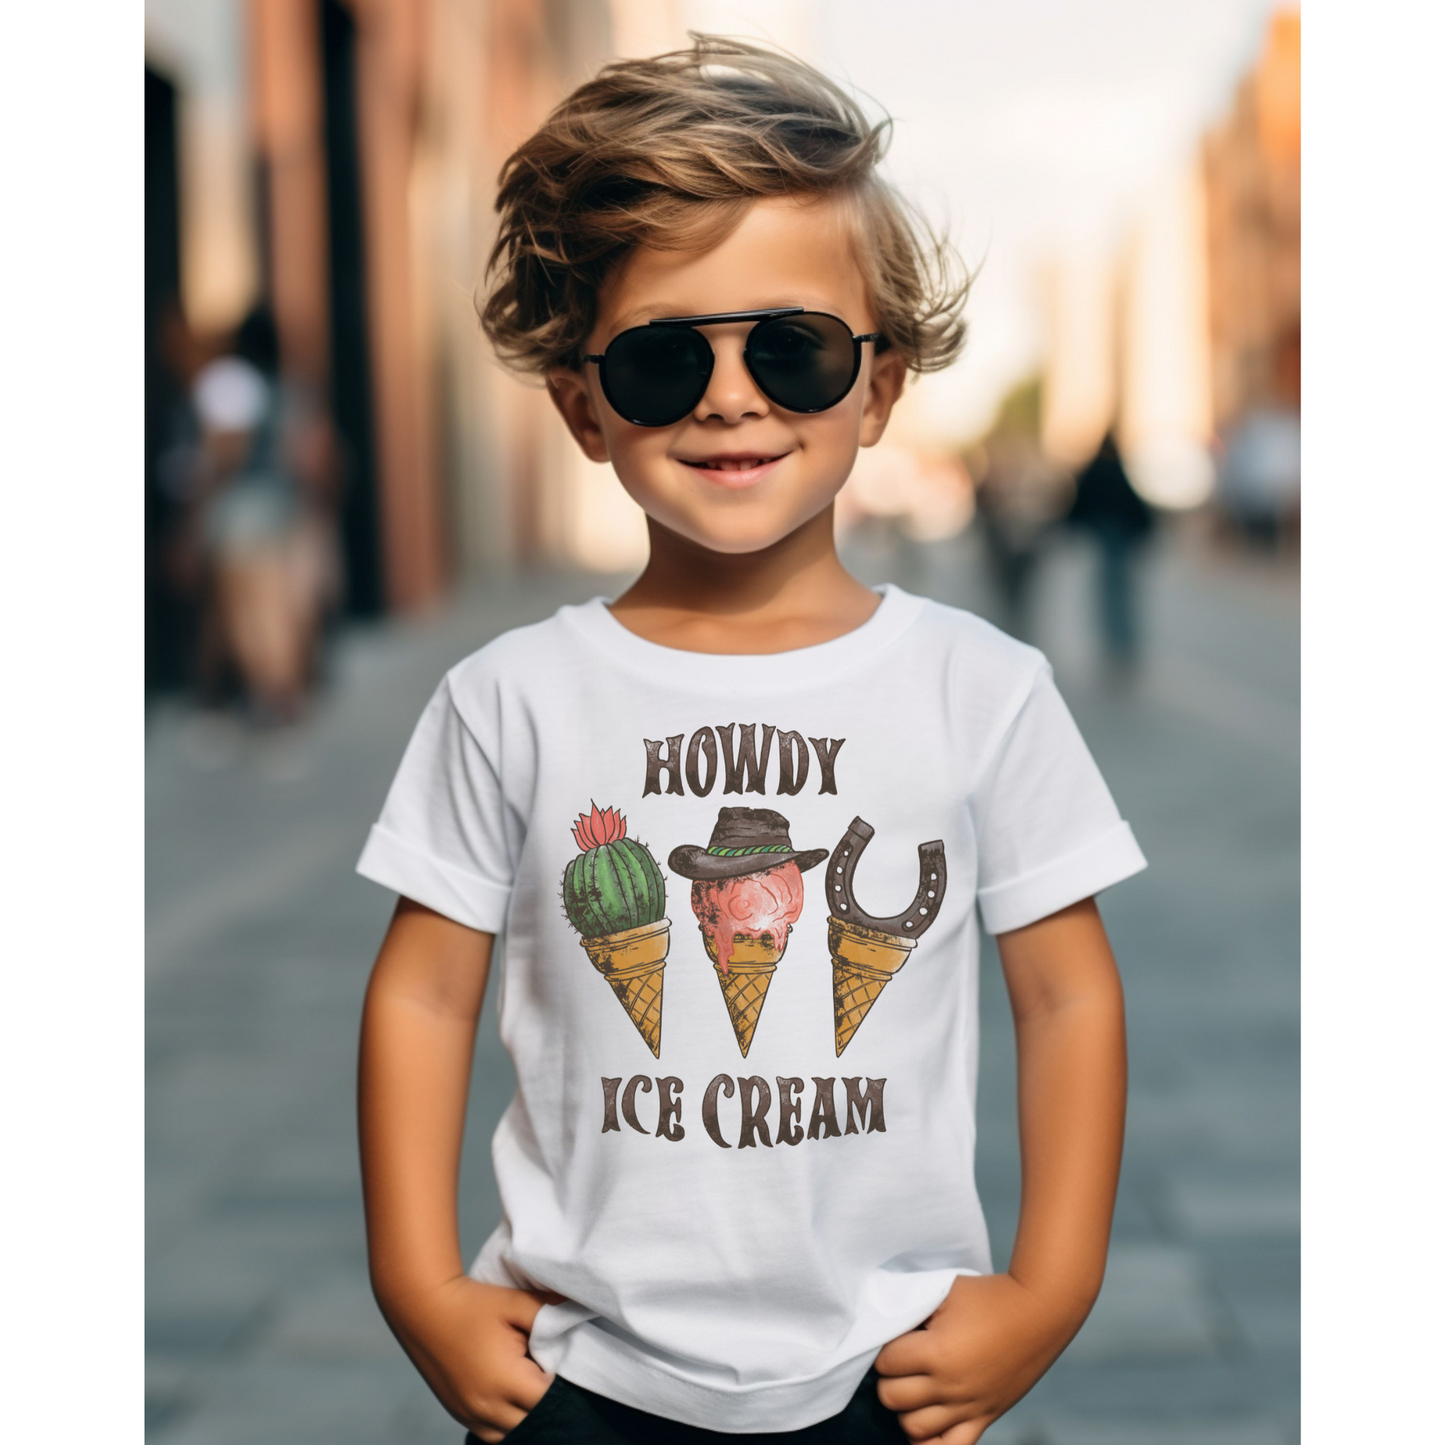 Howdy ice cream DTF transfer